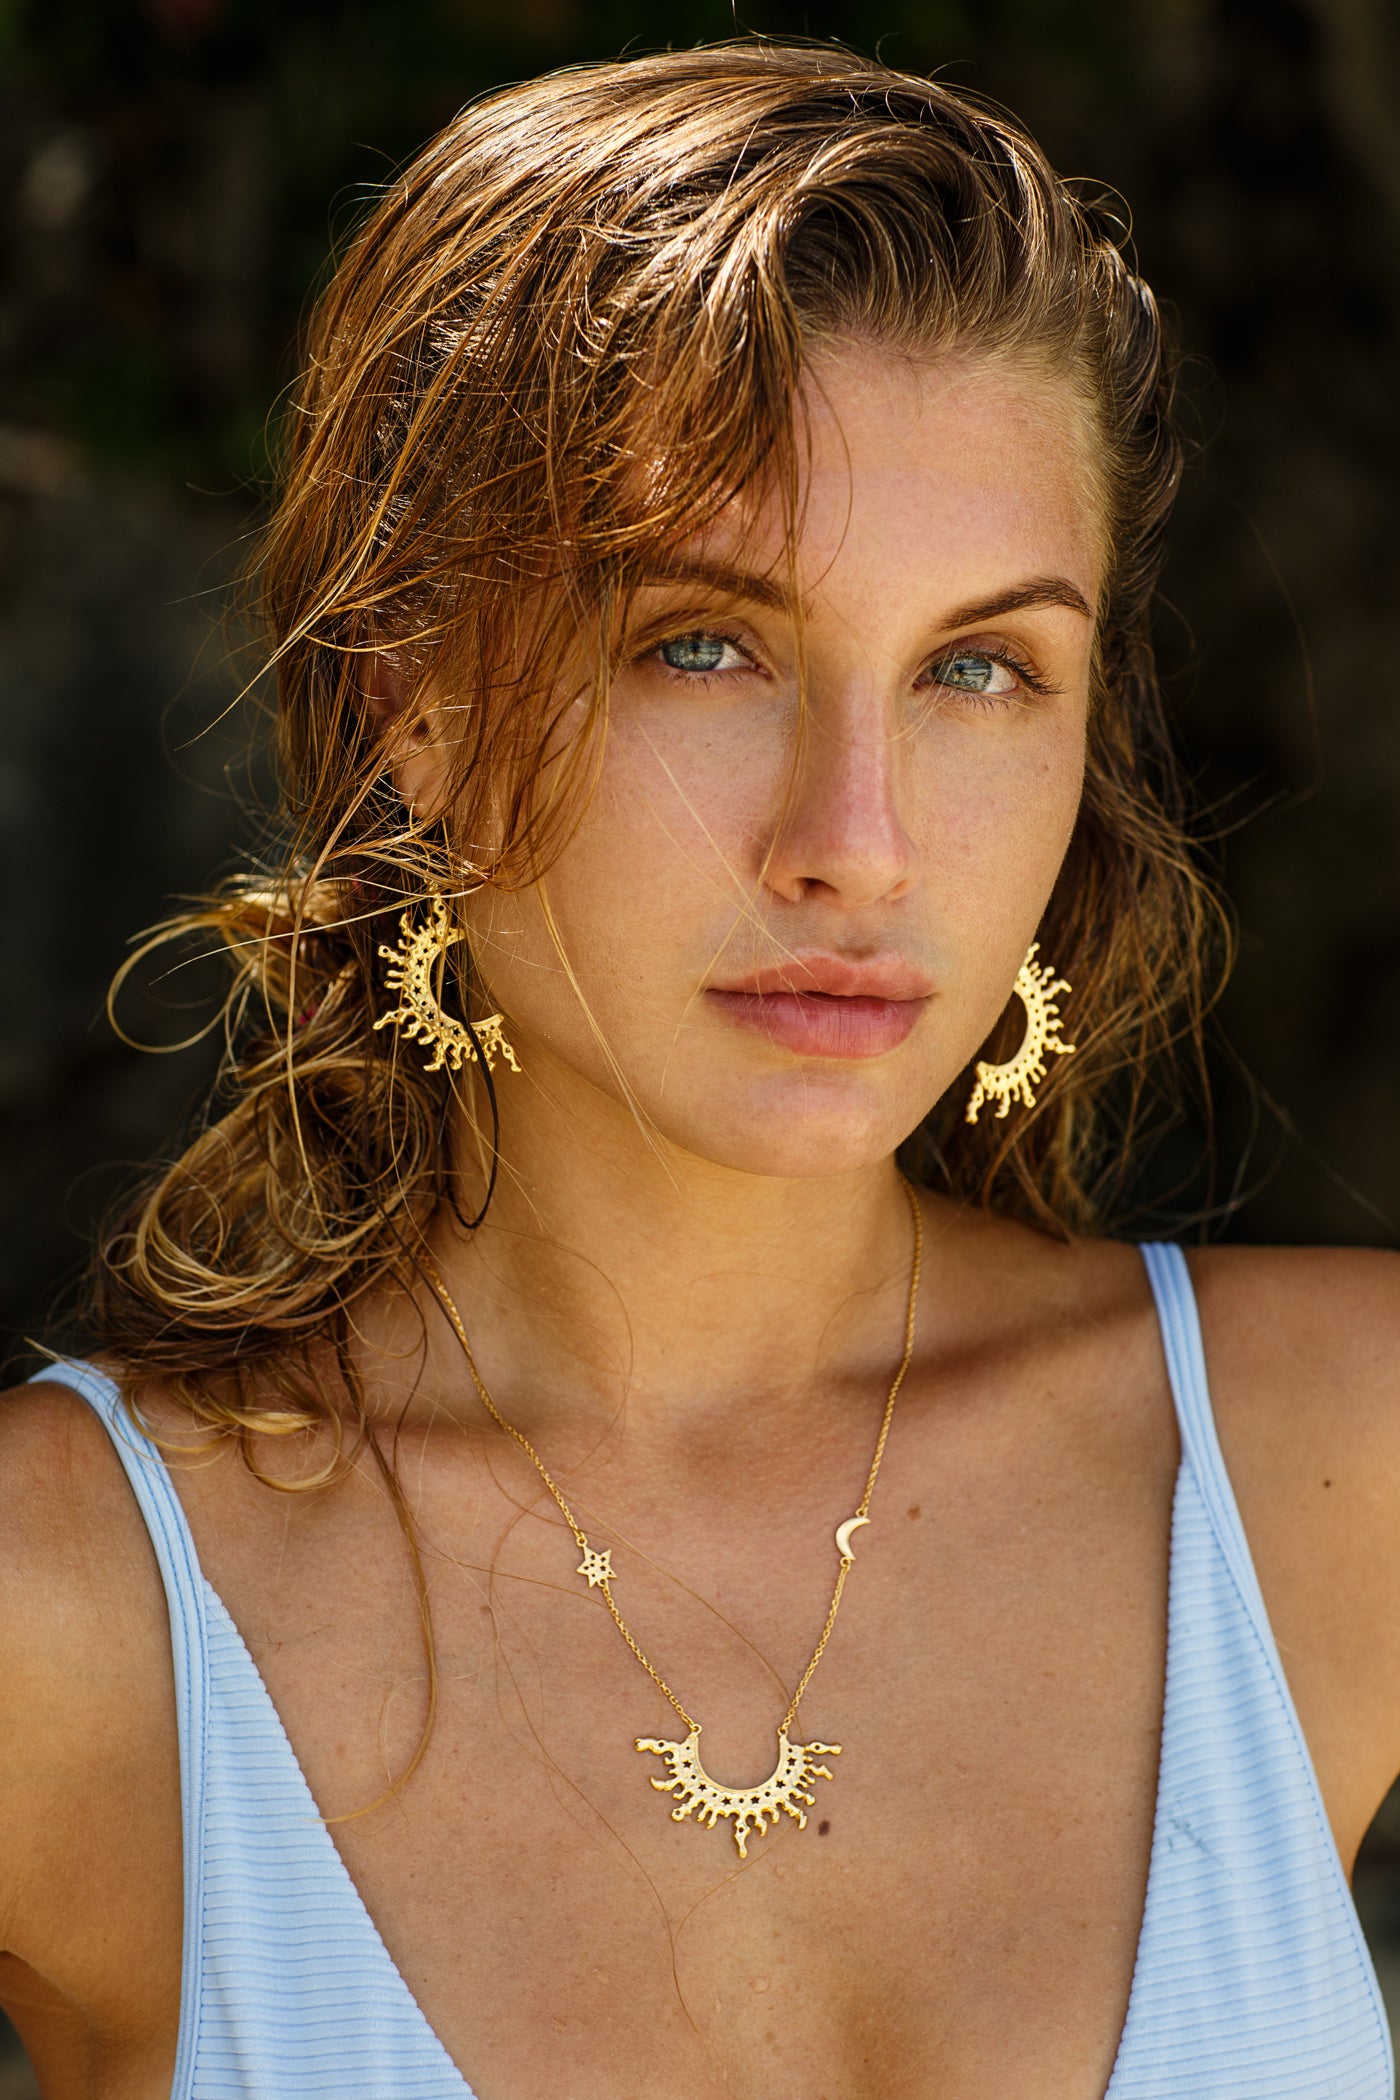 Half Sun earrings. Silver, gold-plated